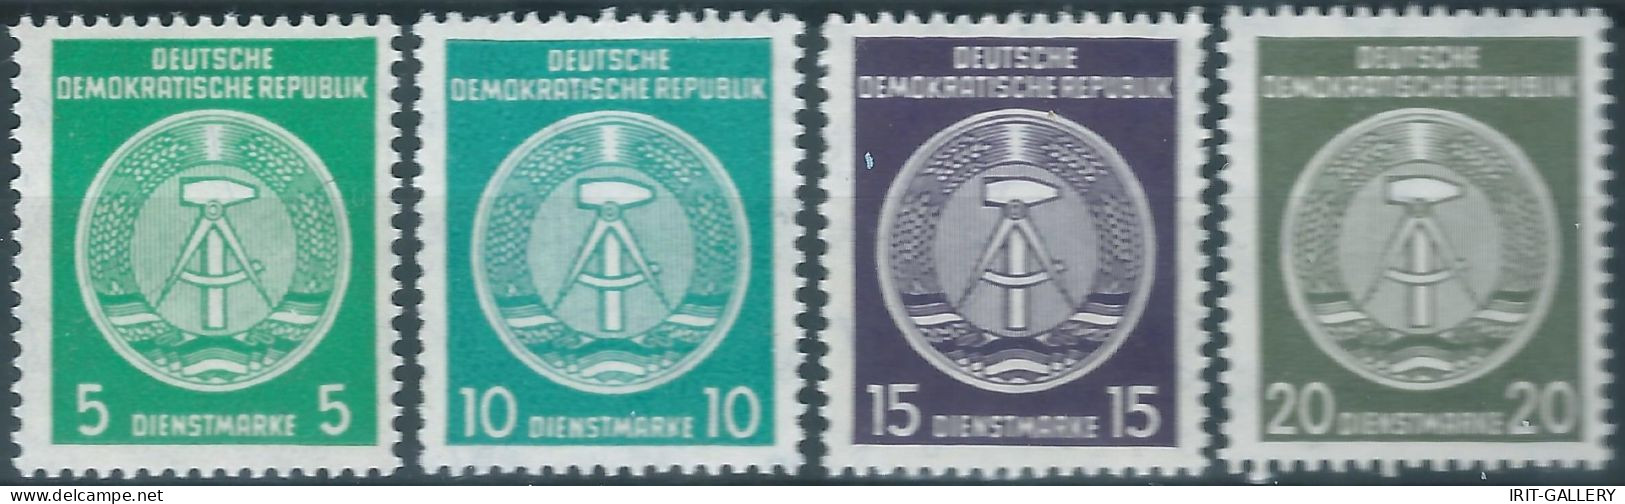 Germany-Deutschland,1954 /1956 Eastern Democratic Republic,DDR ,Service,MNH - Nuovi